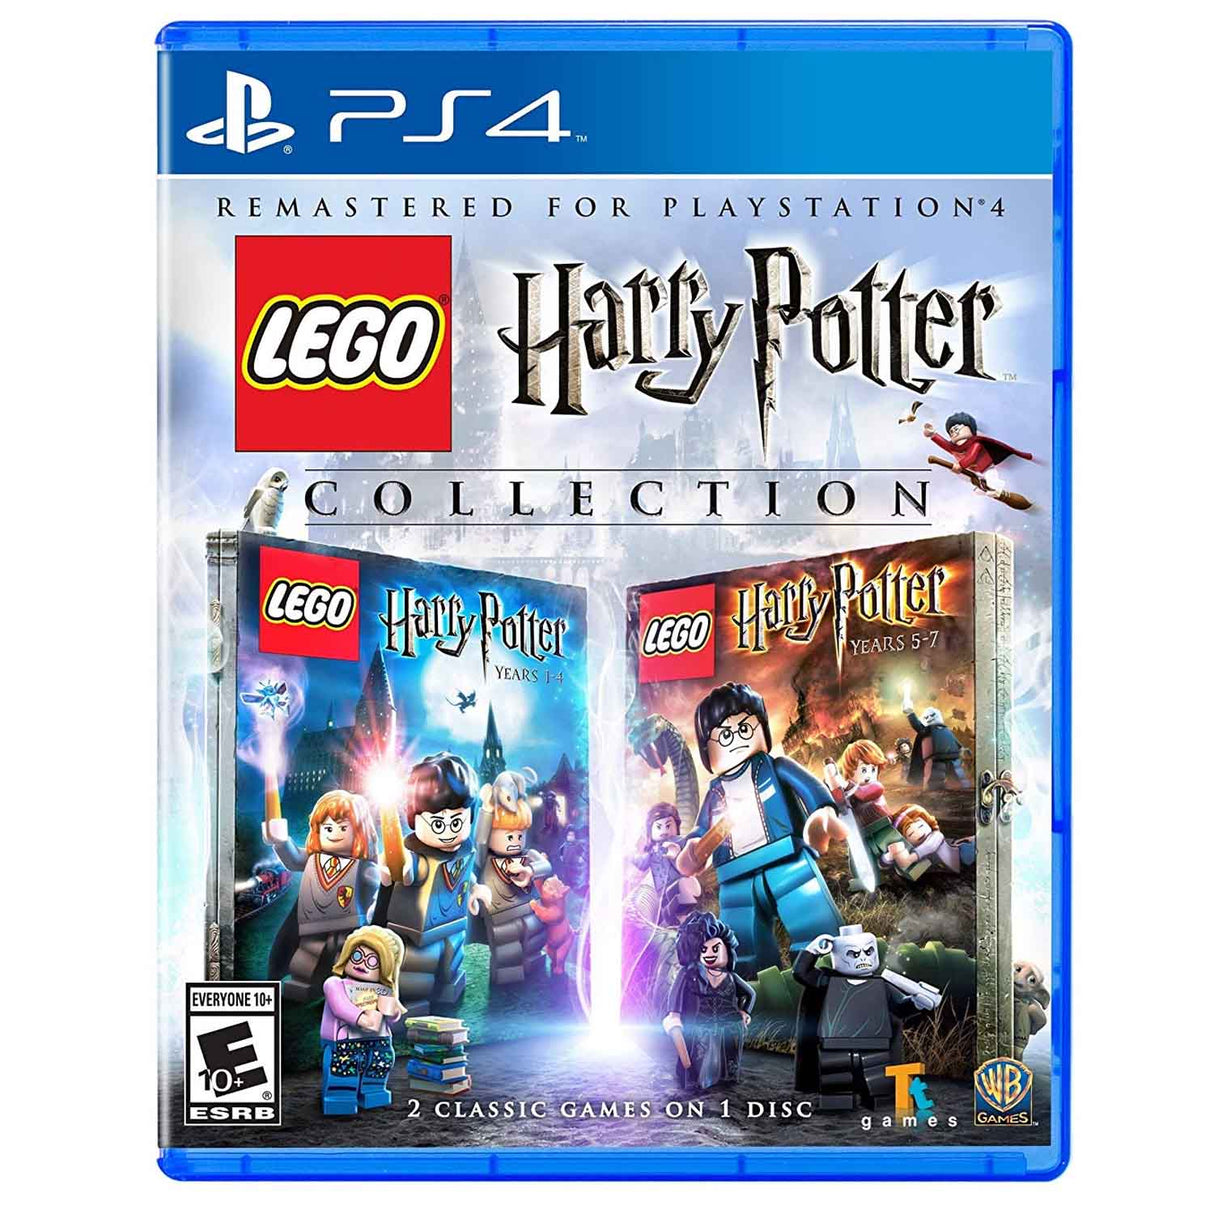 Lego Harry Potter Collection For PlayStation 4 "Region 1" - Level UpLevel UpPlaystation Video Games883929562244